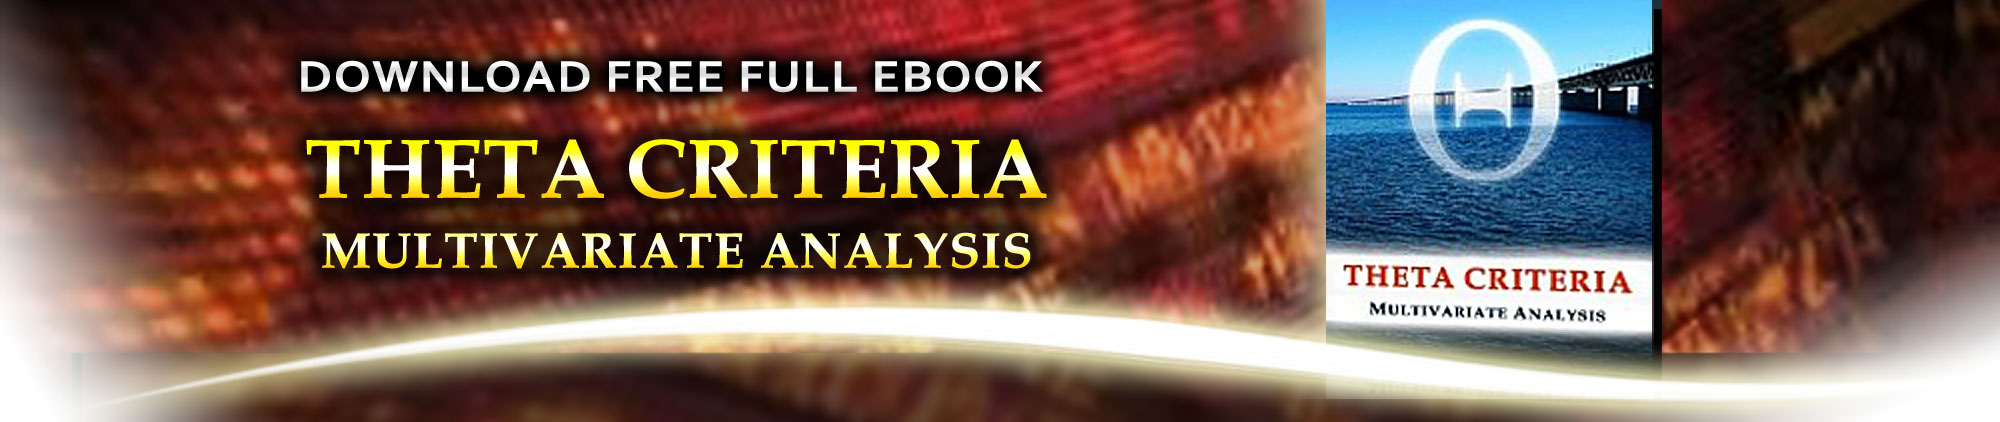 Theta Criteria Slide: Download Free Full eBook